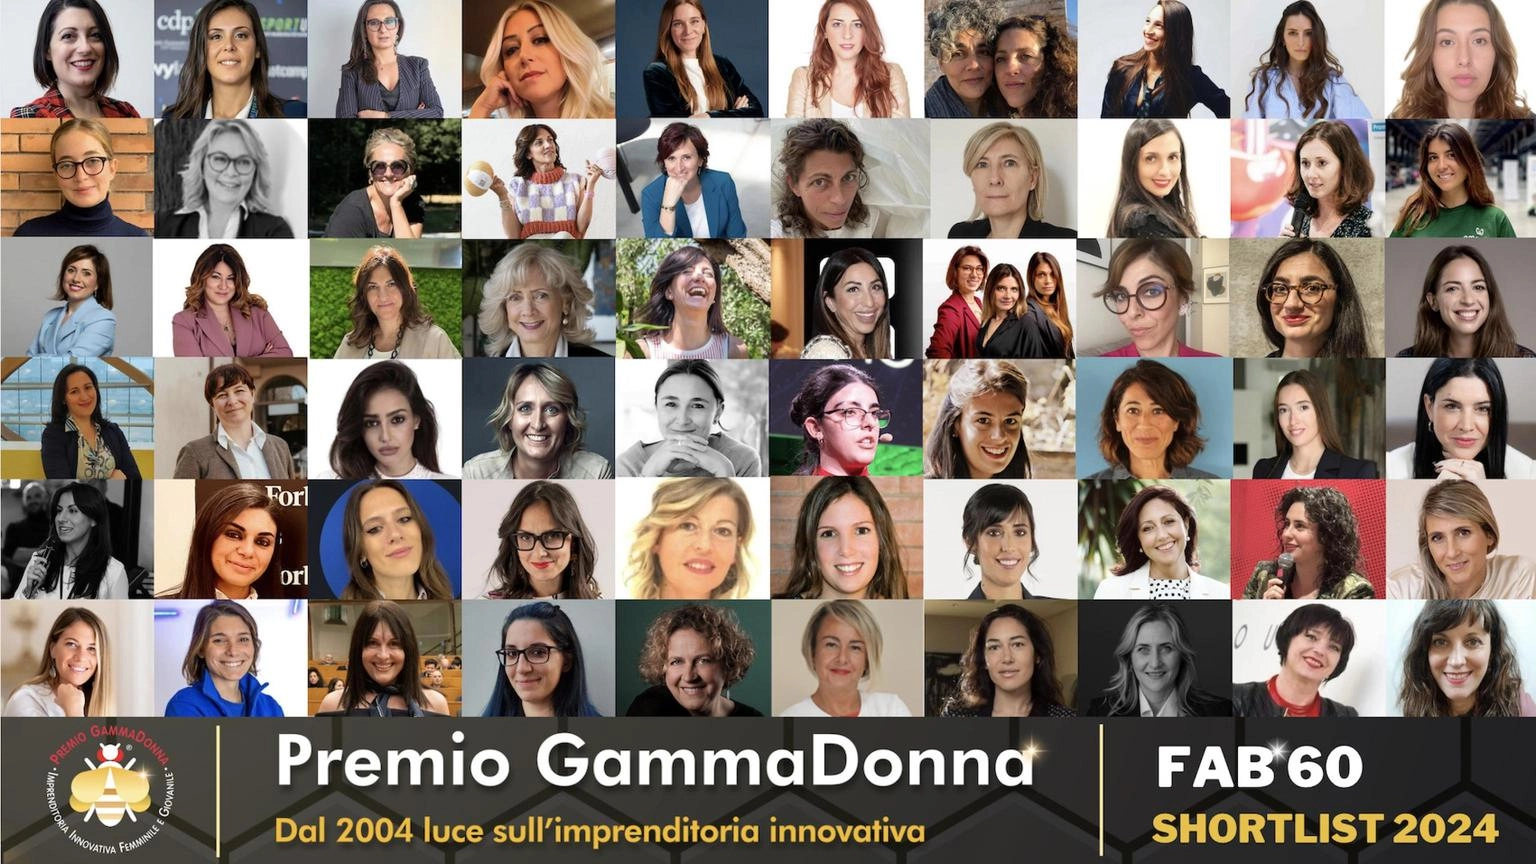 Italia maglia nera gender gap, GammaDonna punta su innovatrici